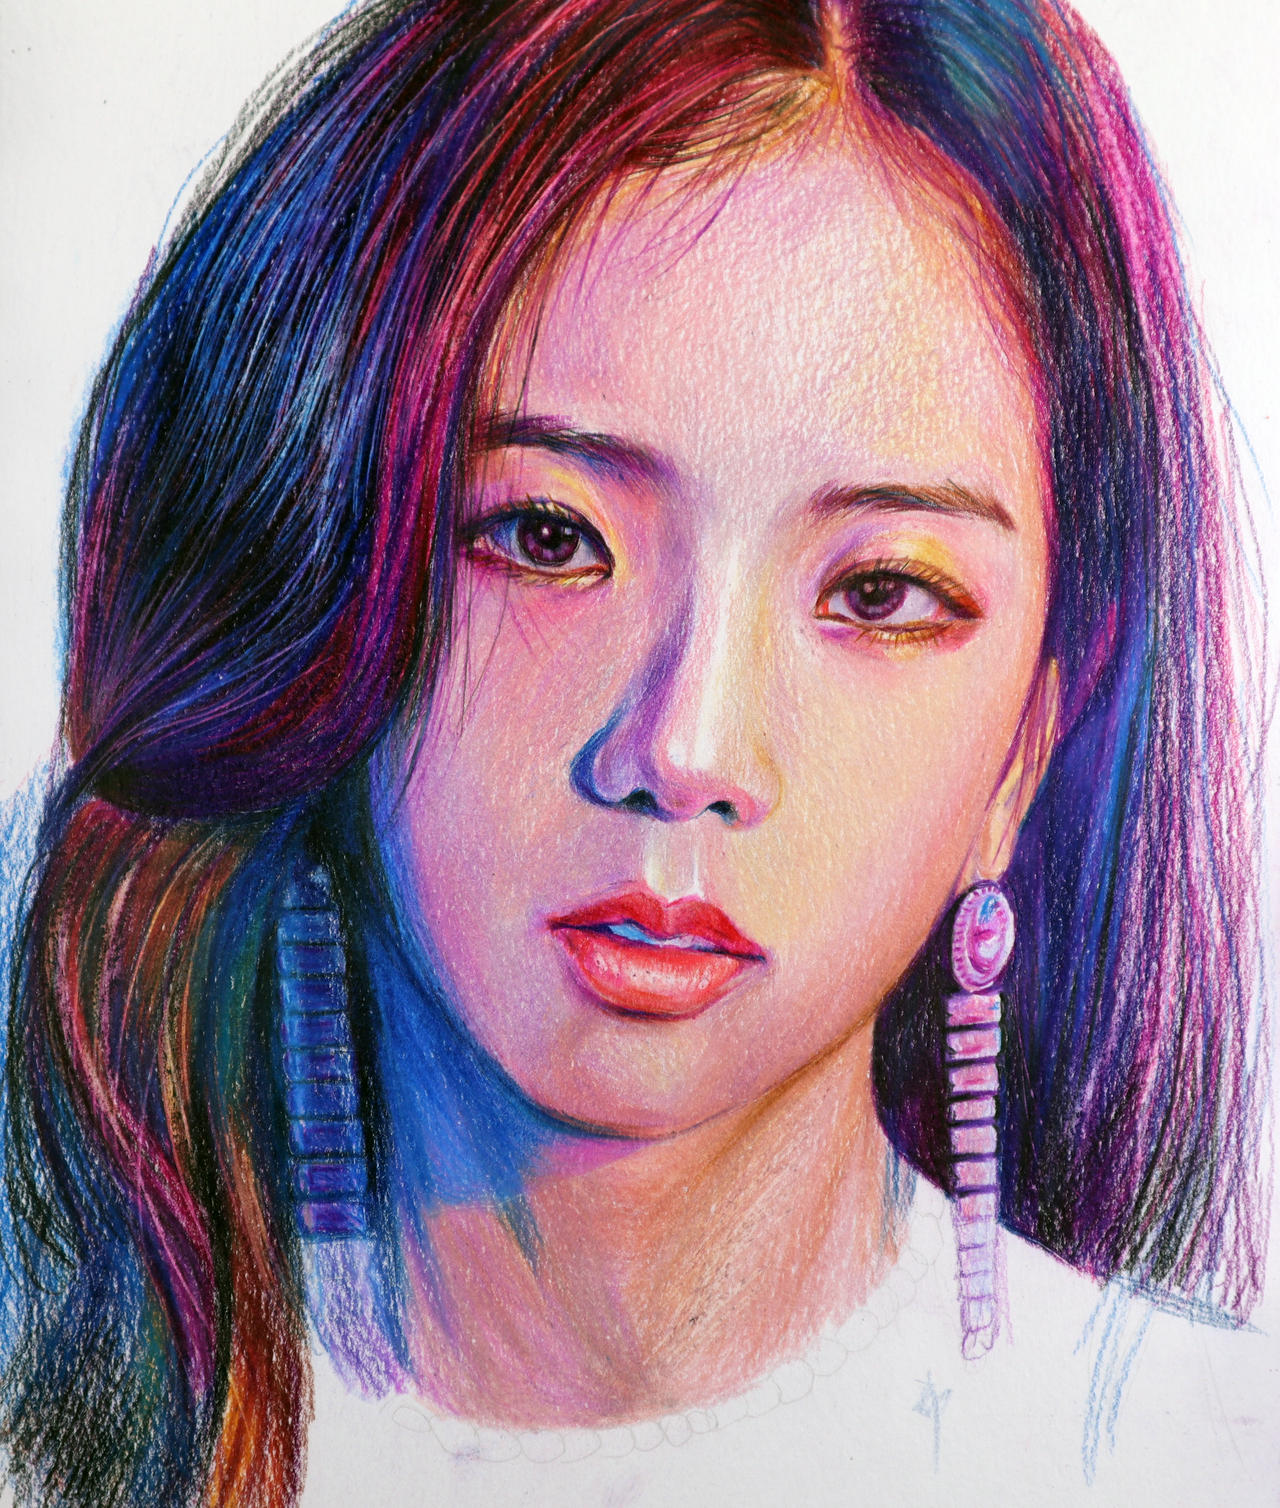 Blackpink Jisoo coloured pencil drawing by heidrawing on DeviantArt